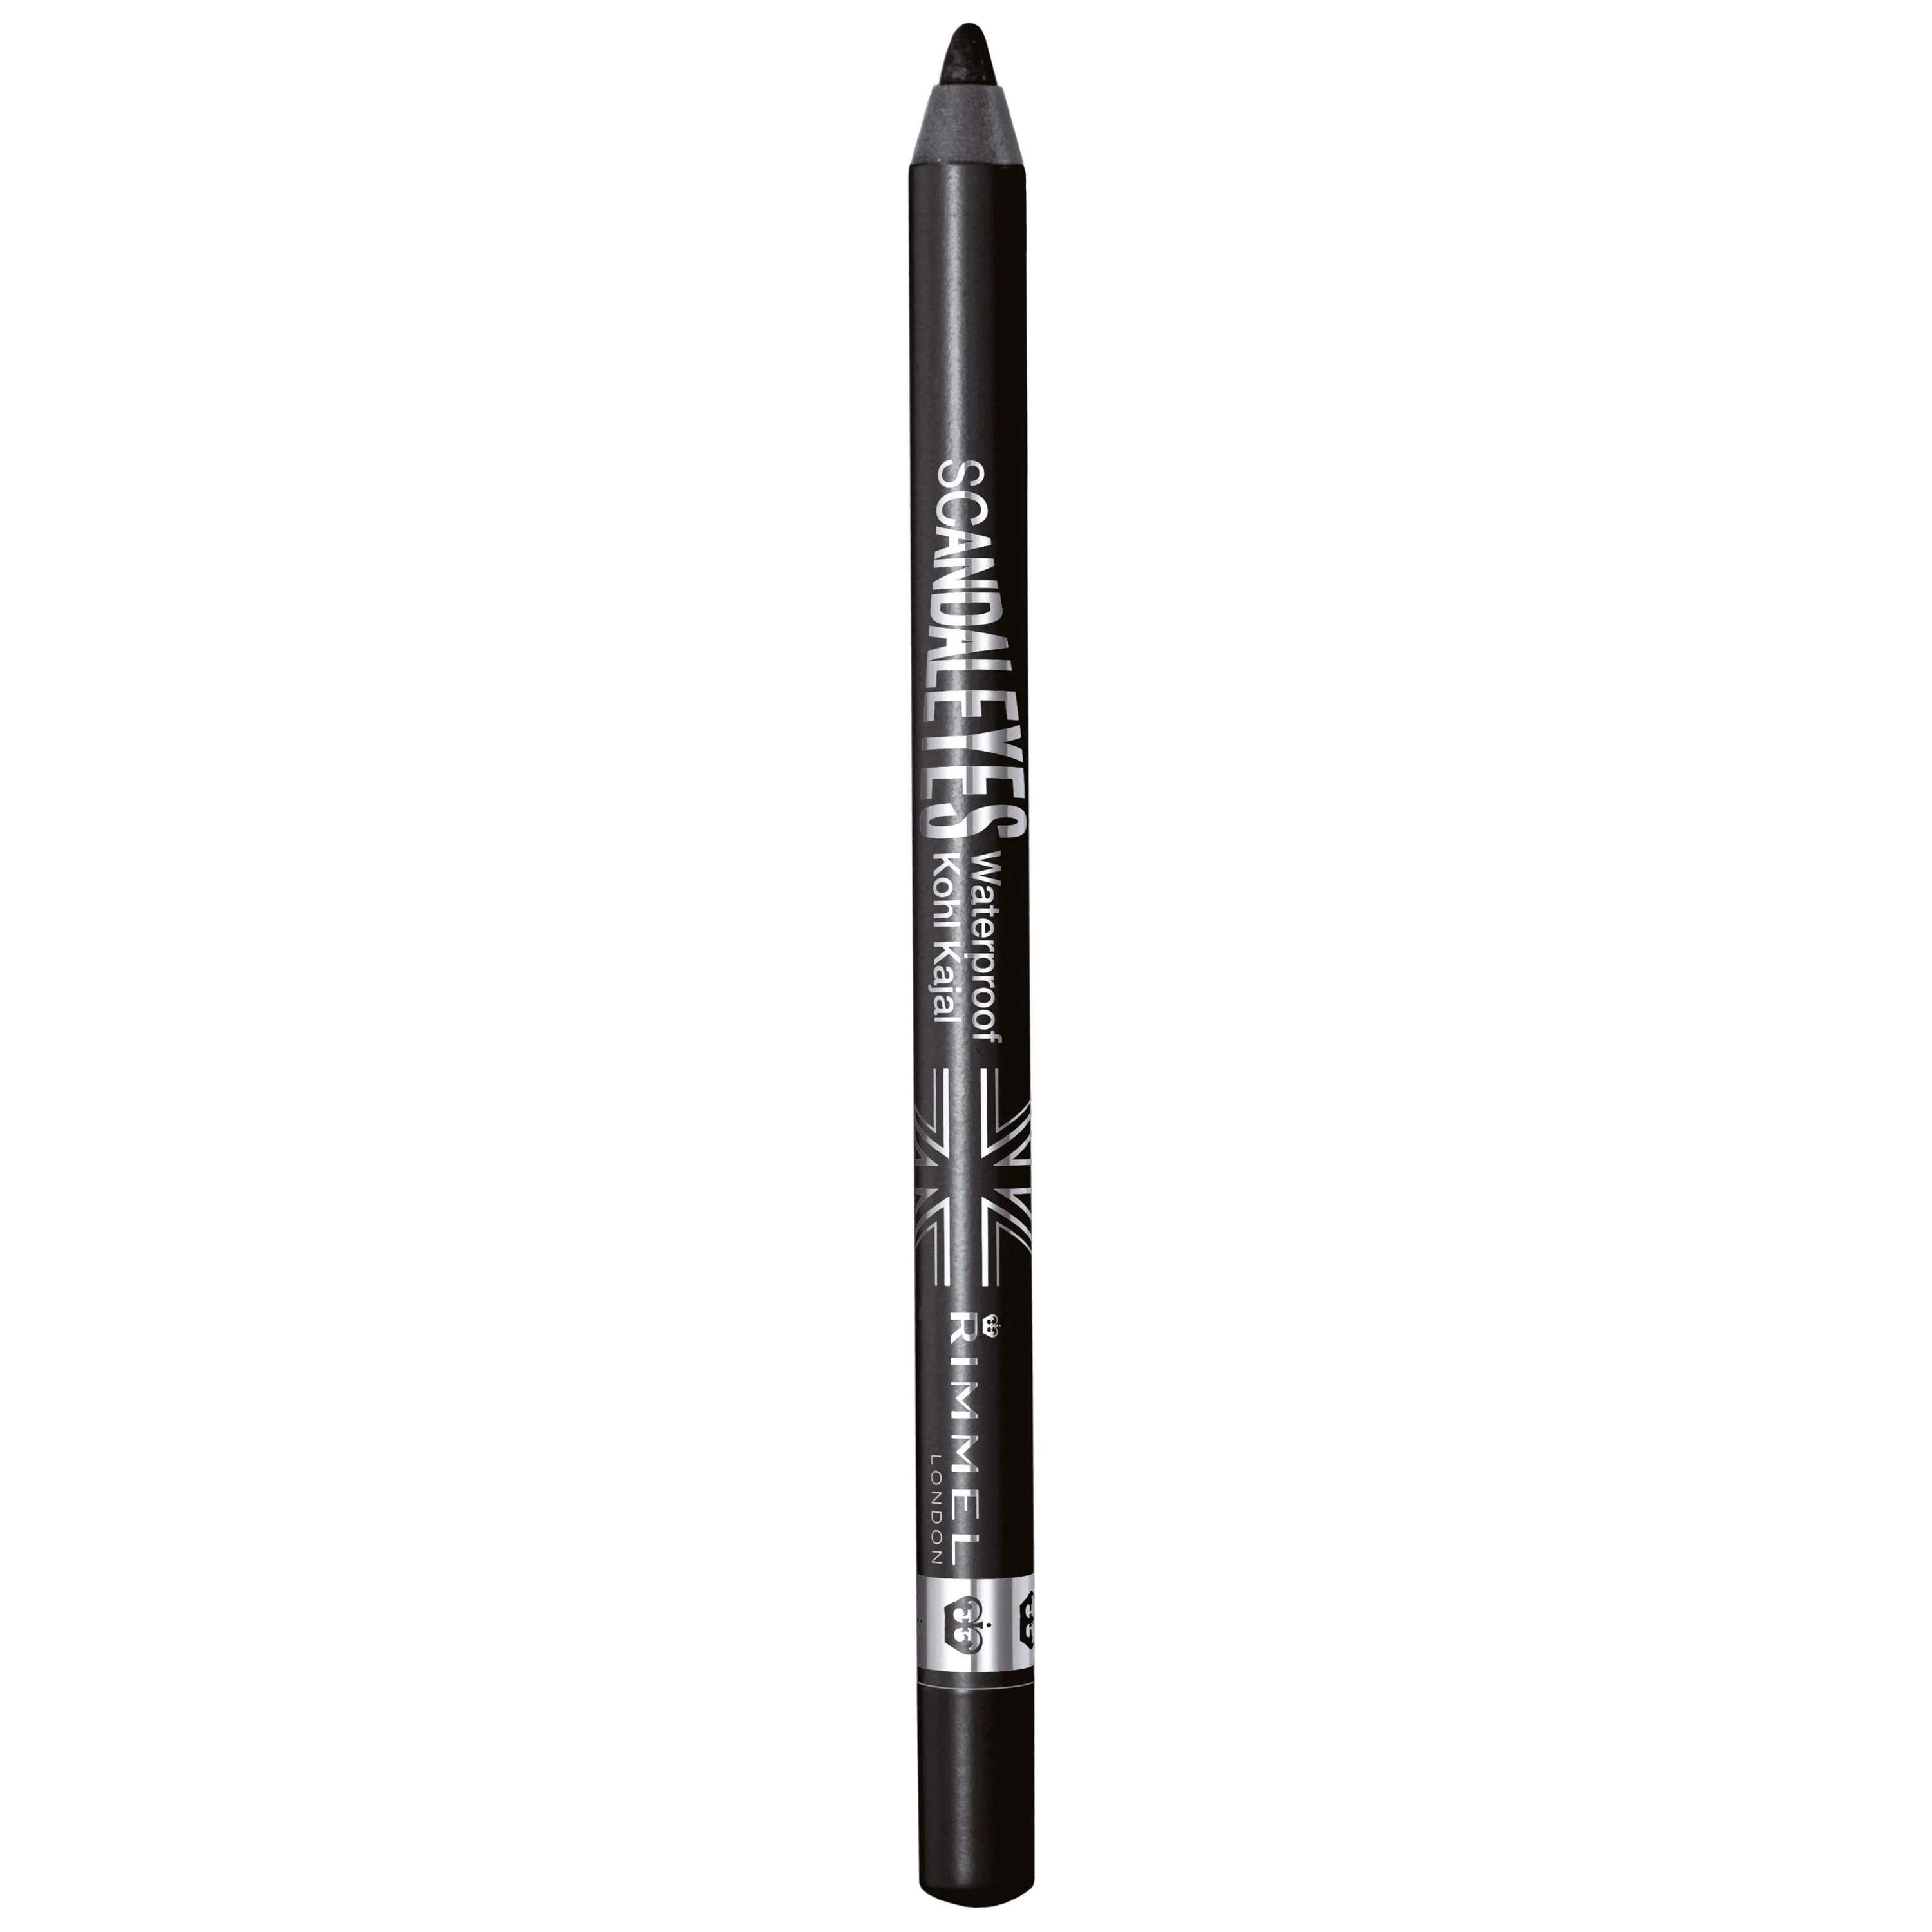 Eyeliner Pencil водостойкий. Карандаш водостойкий для глаз \"Waterproof Eyeliner\". Водостойкий карандаш для век Isadora perfect Contour Kajal Waterproof т.60 1,2 г. Armani smooth Silk Eye Pencil 8.